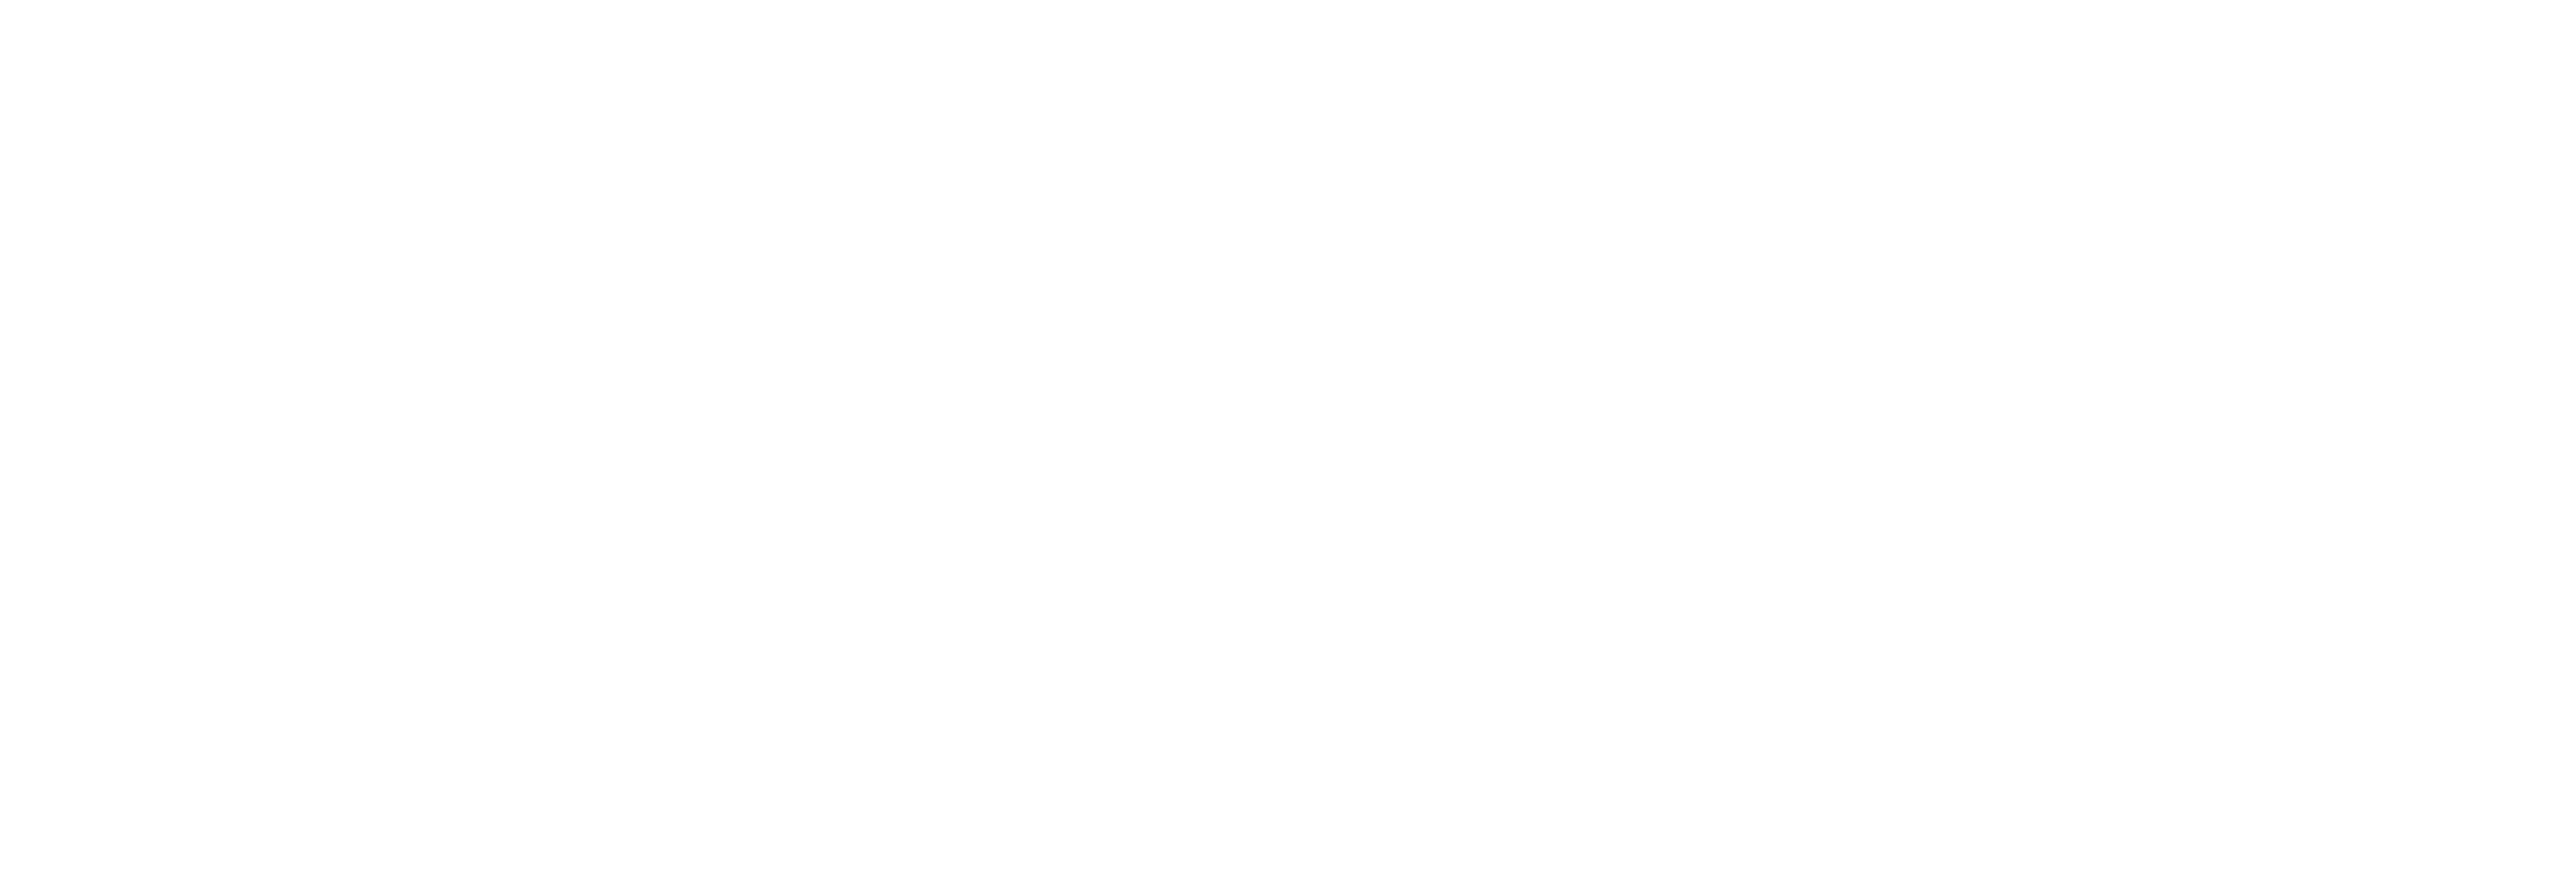 AniCura IF Villalba Hospital Veterinario logo